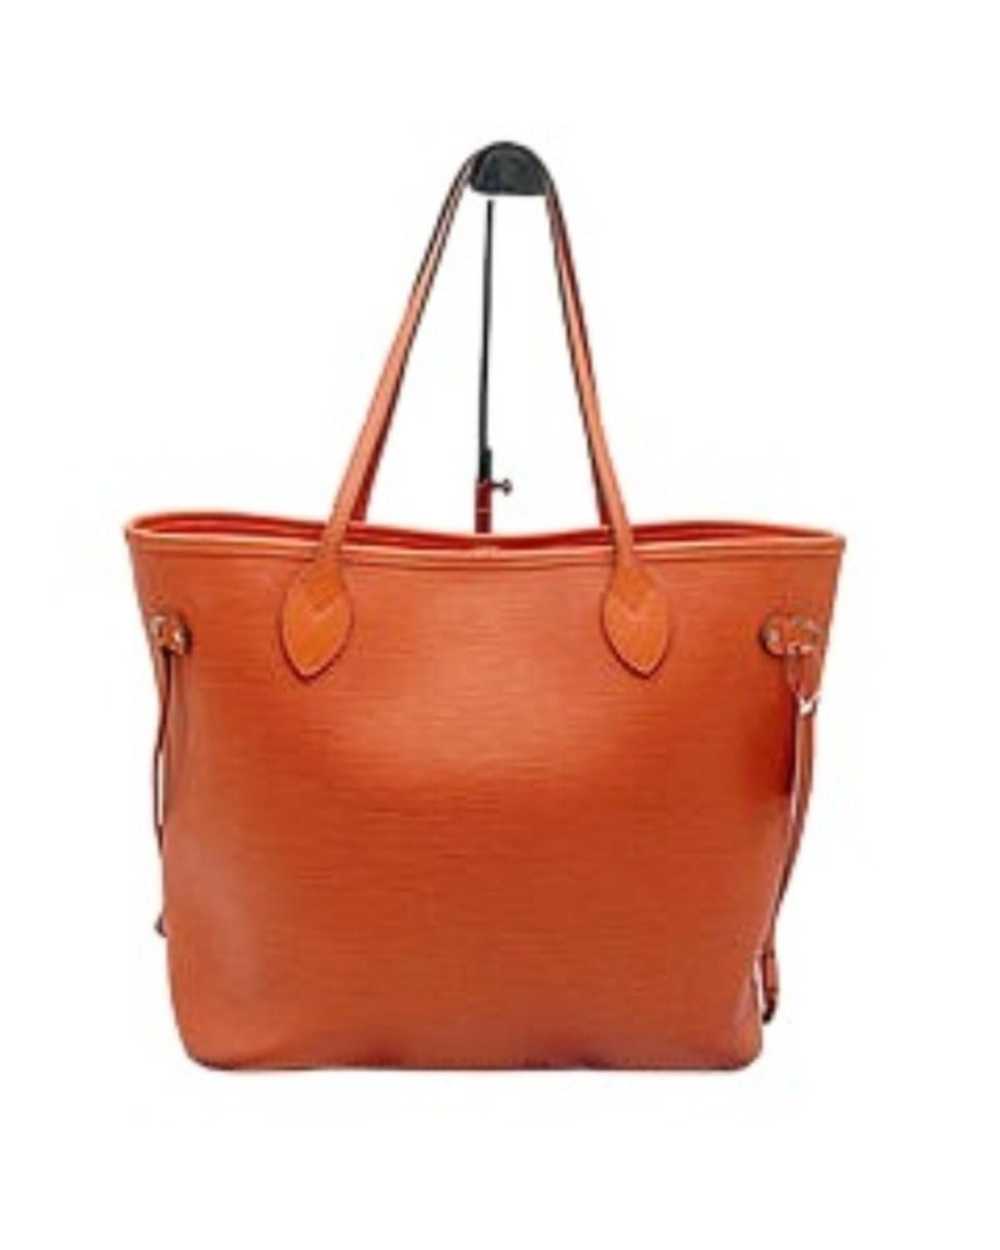 Louis Vuitton Elegant Leather Tote Bag - image 2